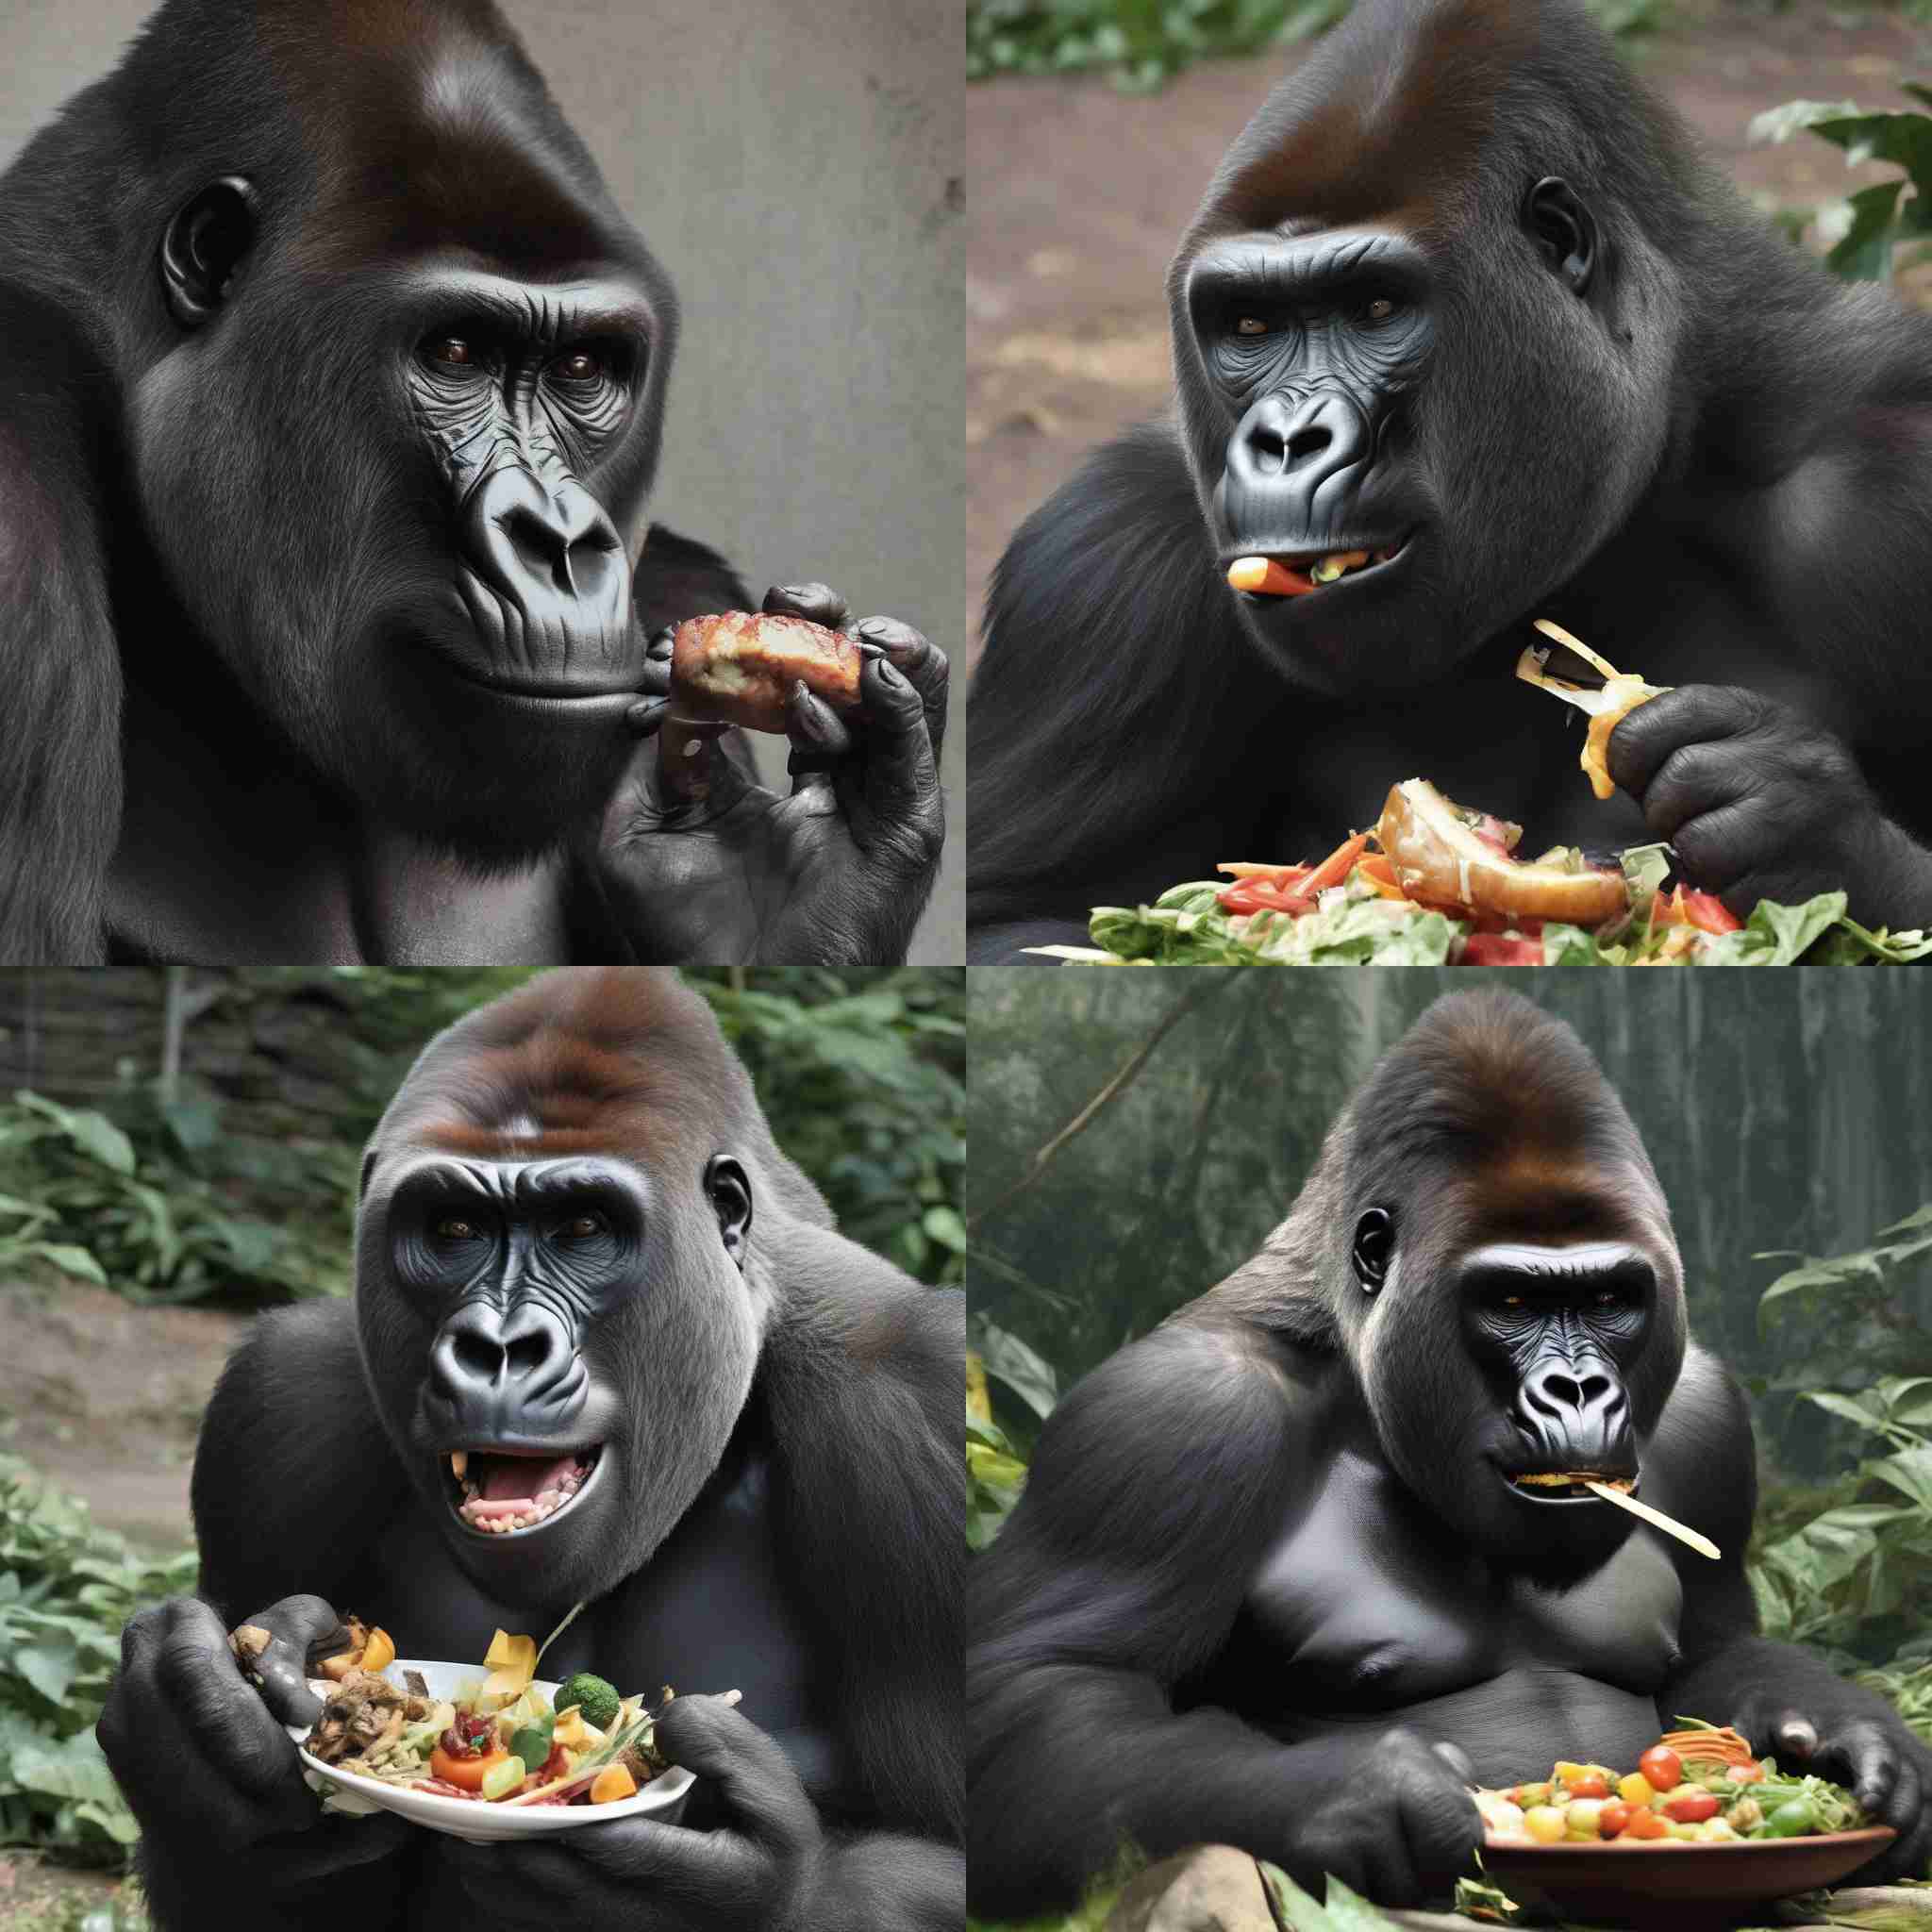 An eating gorilla